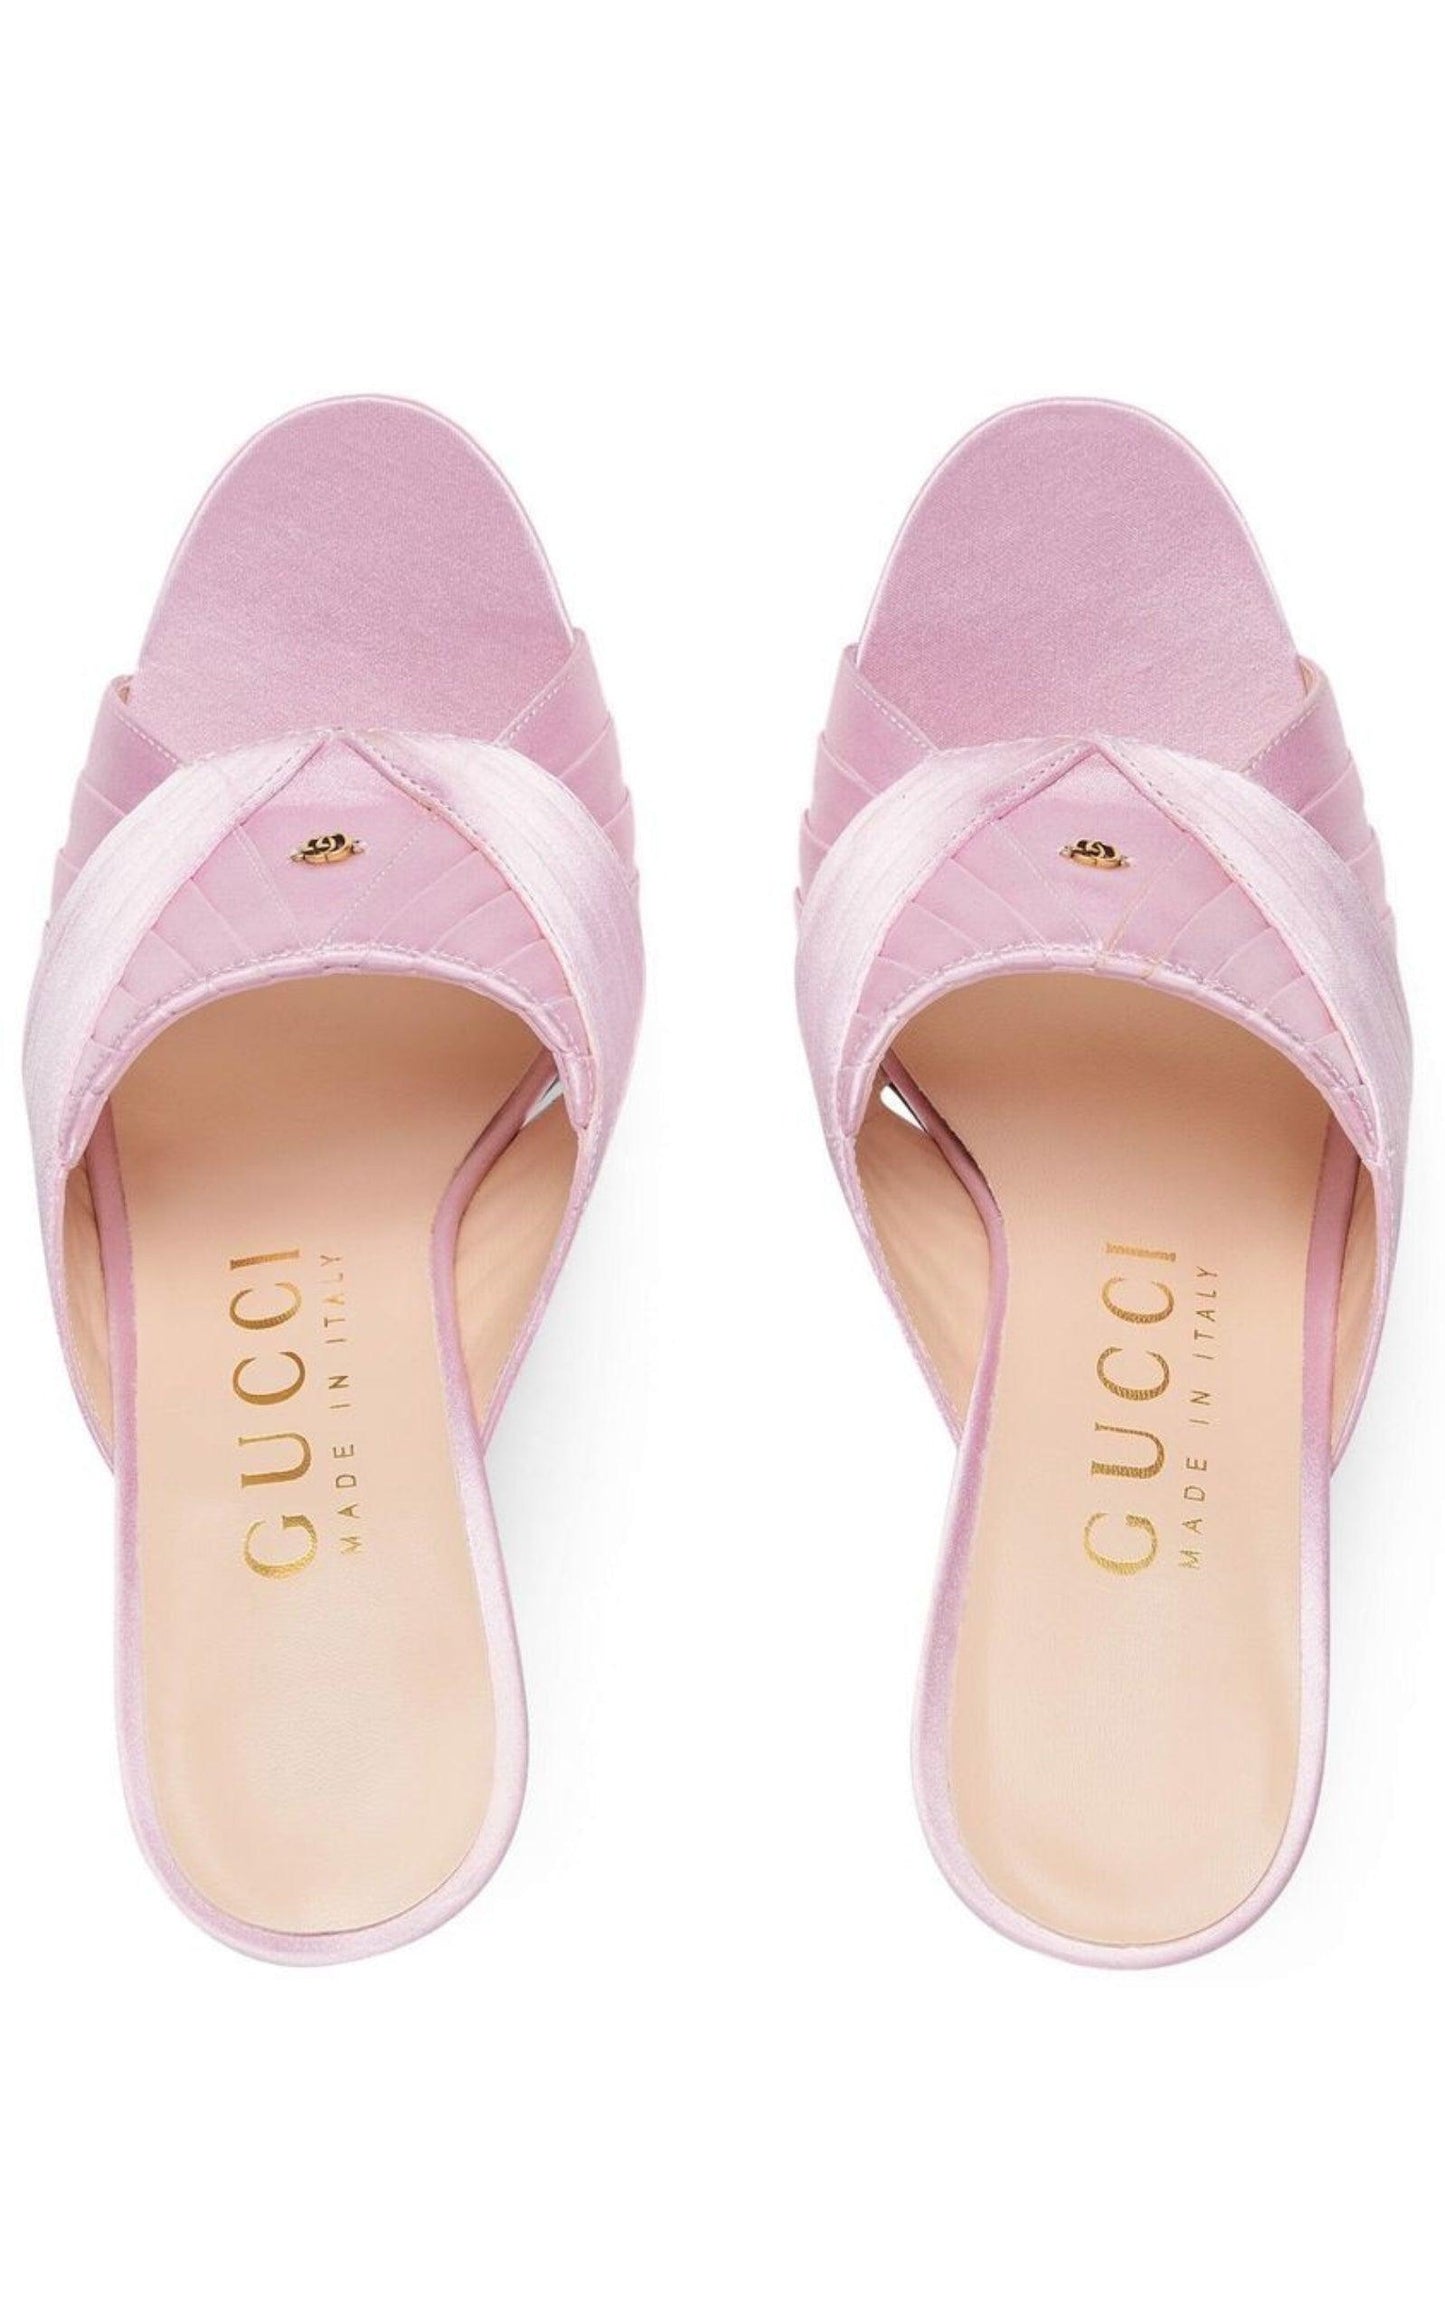 Sandalen aus rosafarbenem Satin mit Doppel-G, 95 mm